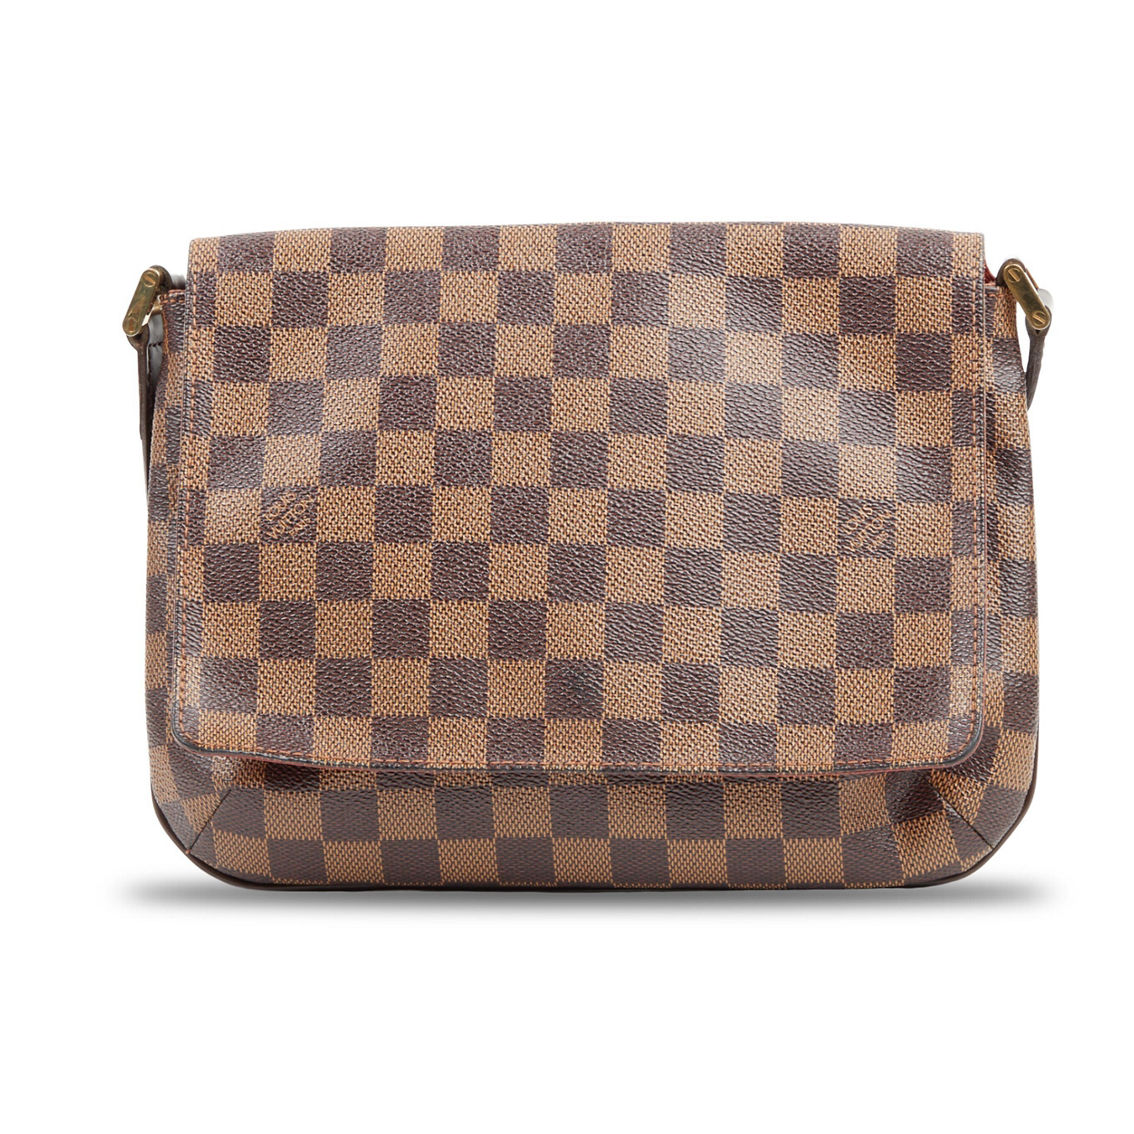 Louis Vuitton Musette Tango Damier Ebene In Good Condition Shoulder Bag